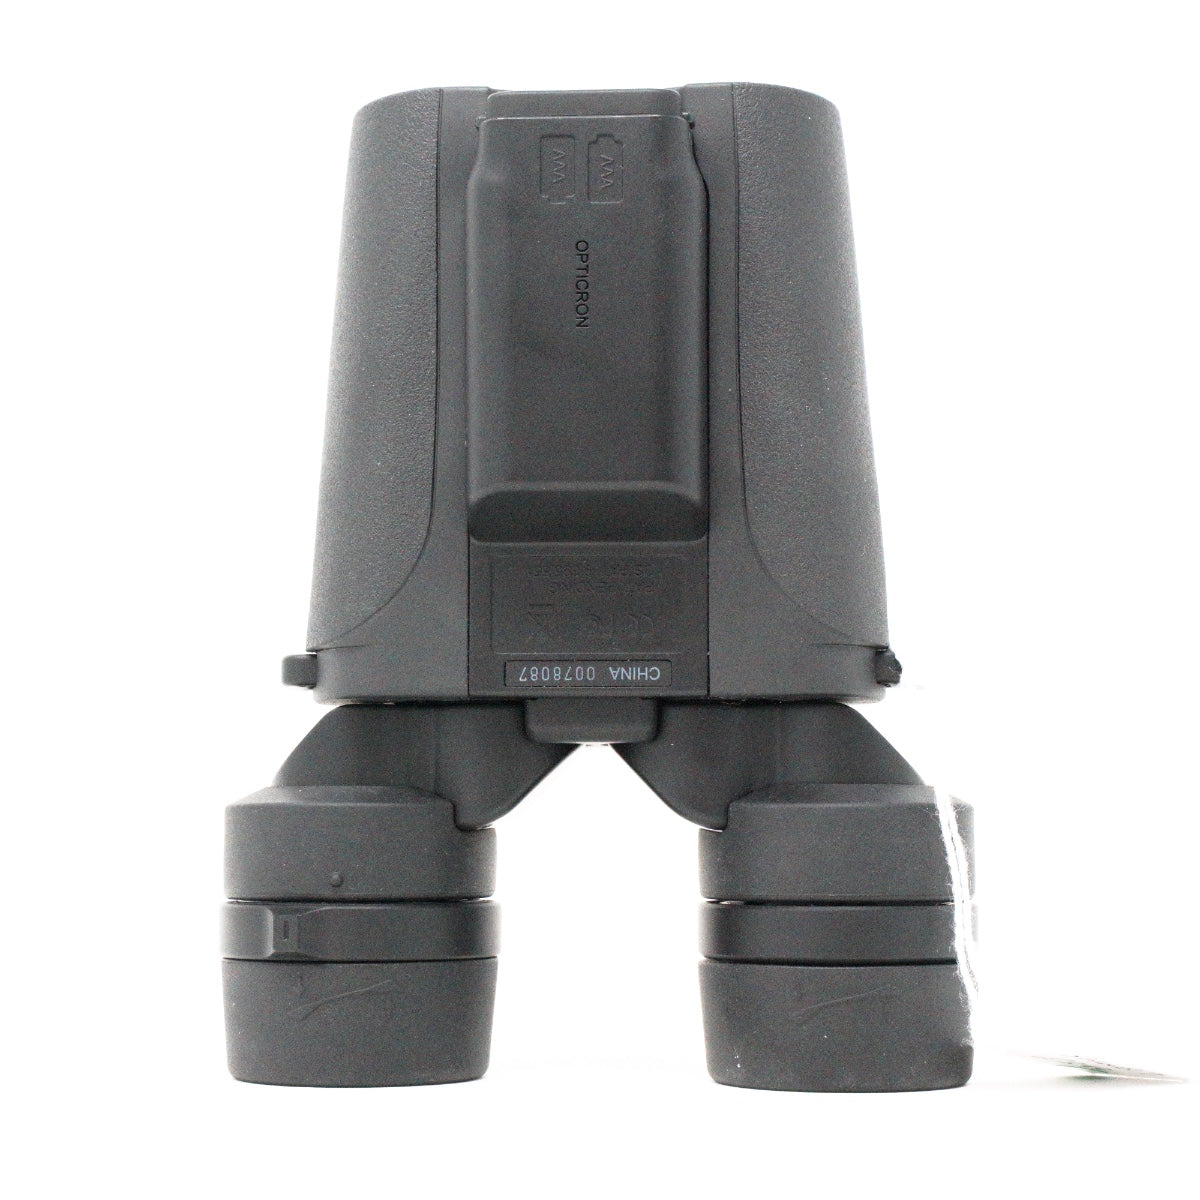 USED Opticron Imagic IS Binoculars 12x30